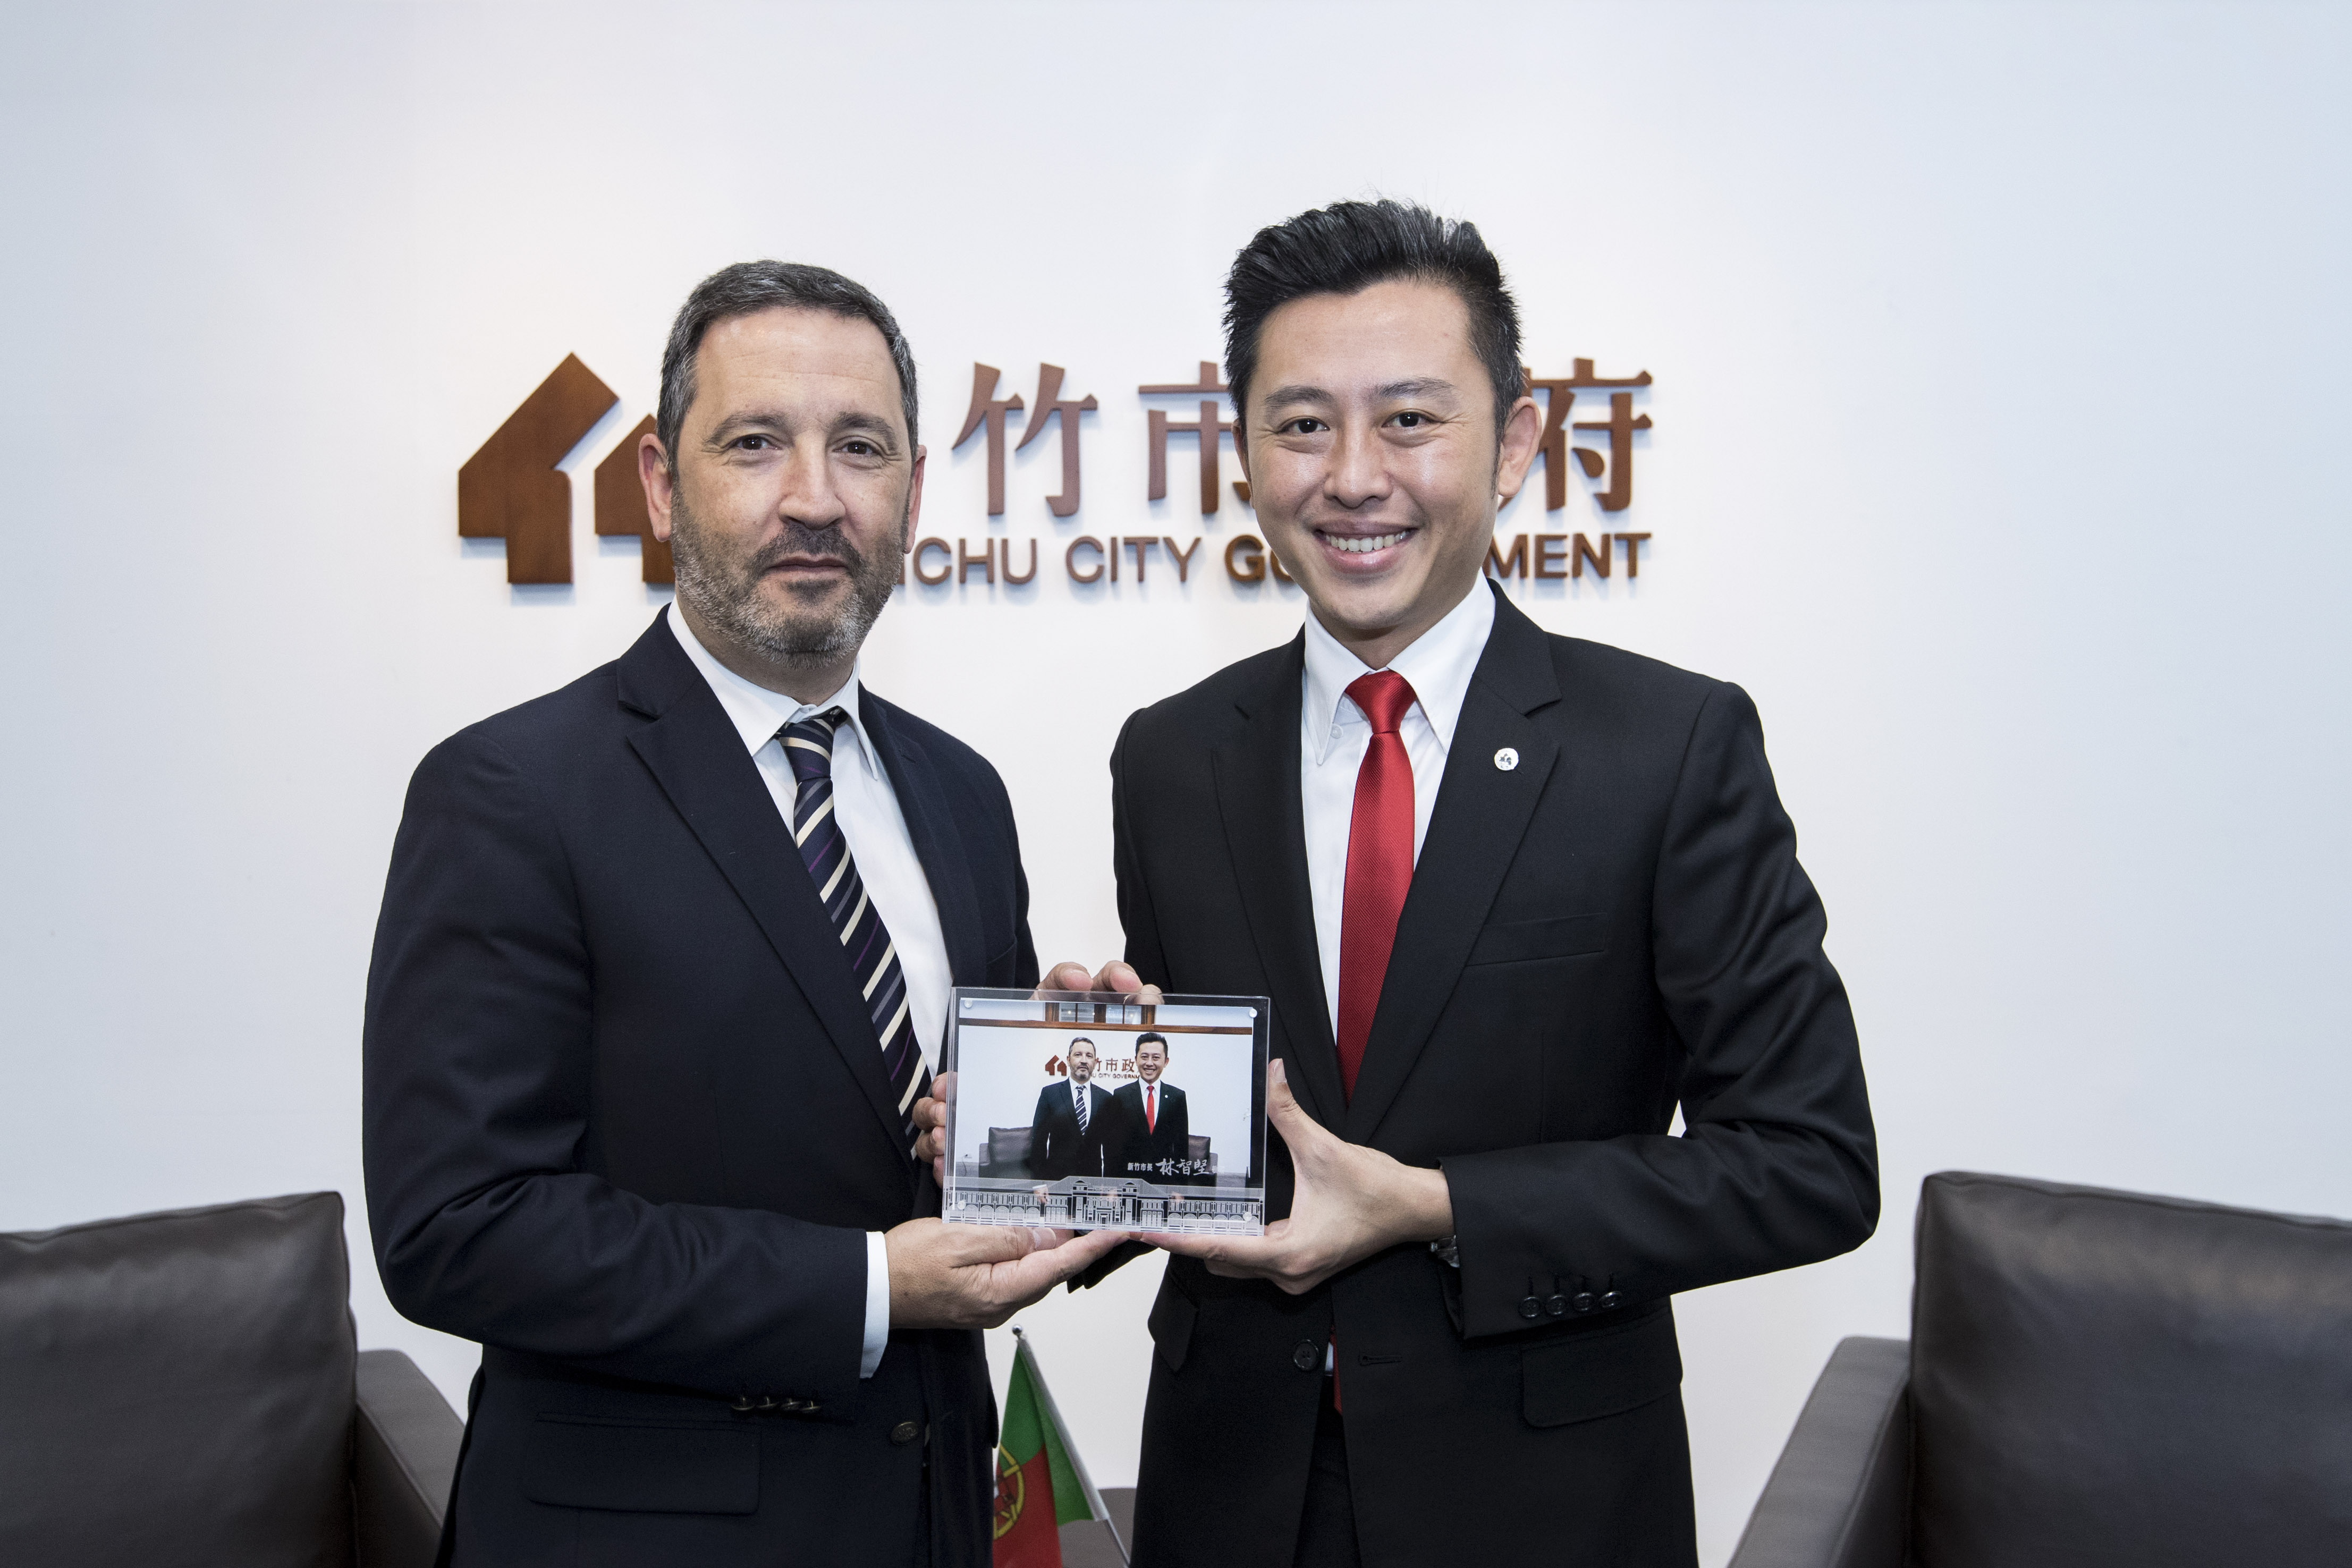 Mayor Lin and Chairman Oliveira